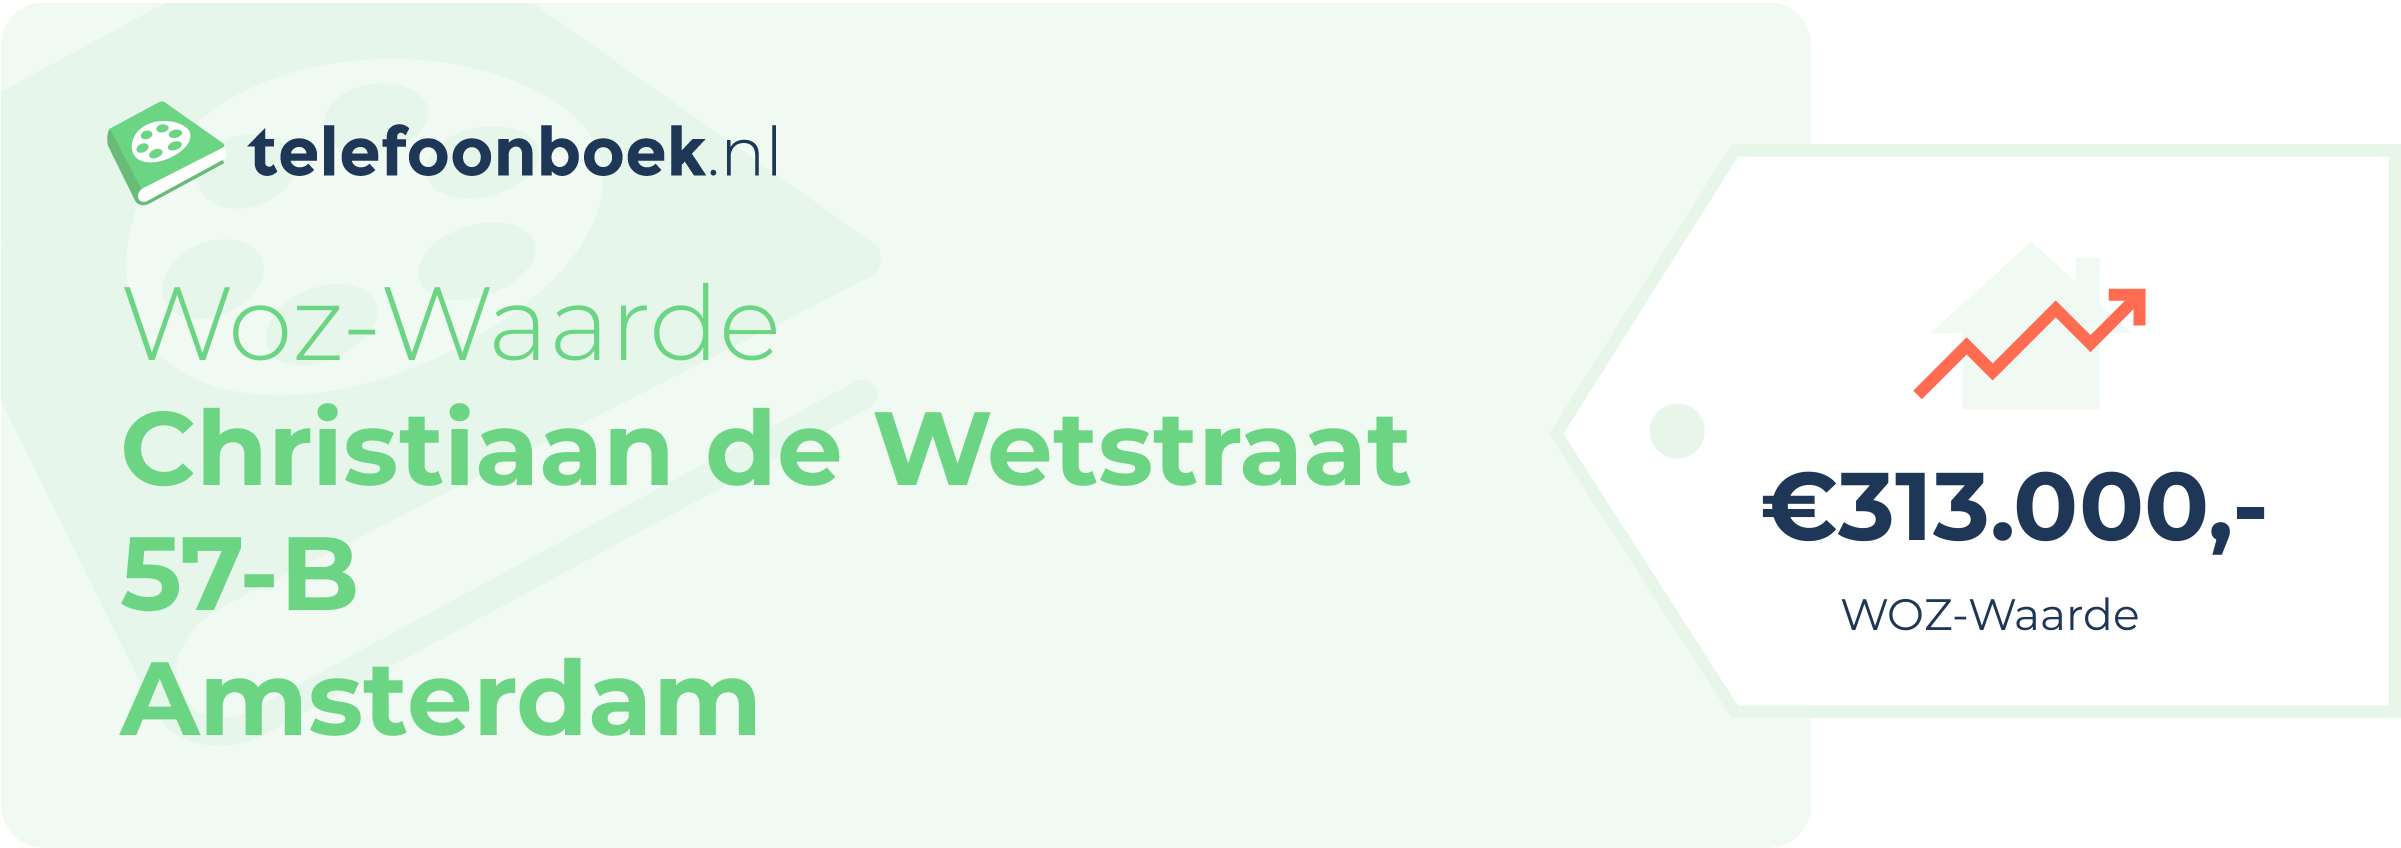 WOZ-waarde Christiaan De Wetstraat 57-B Amsterdam